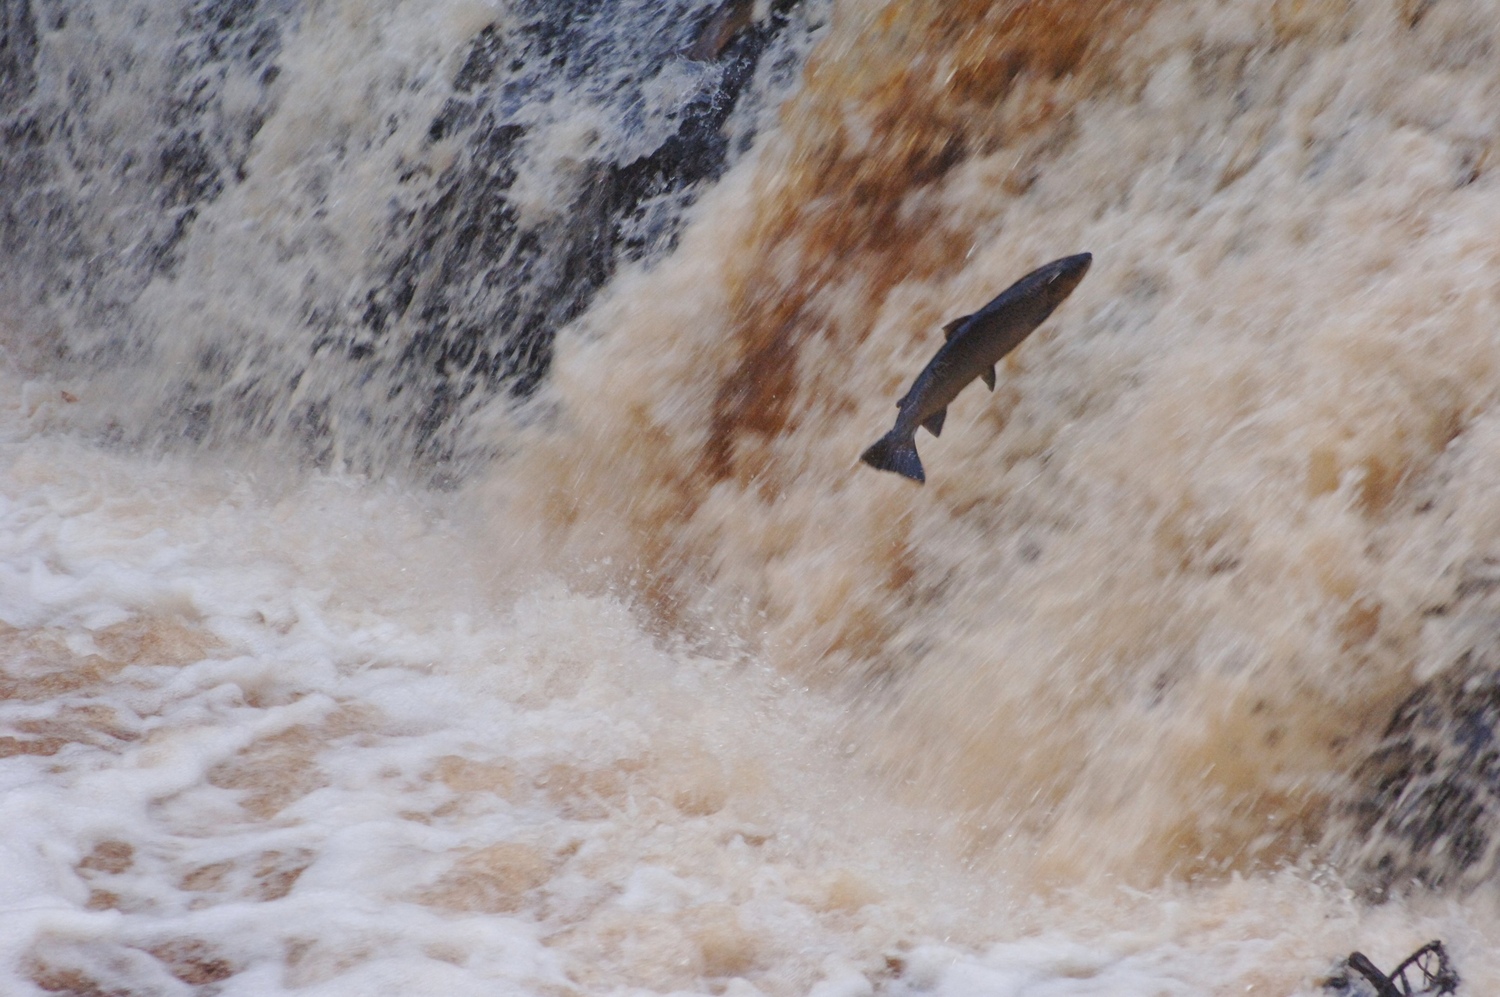 Salmon jumping up waterfall